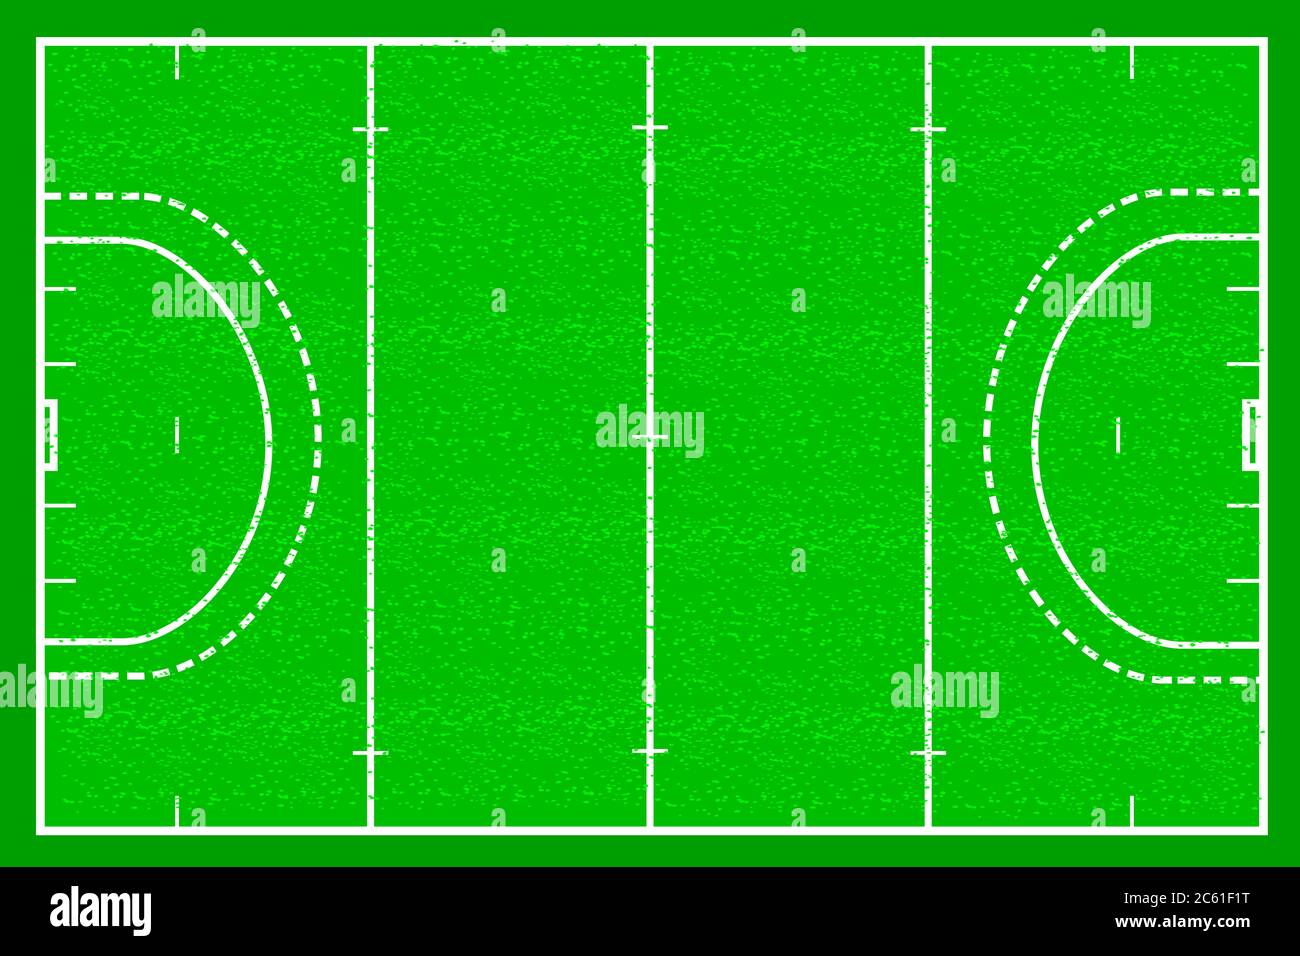 Field grass hockey court vector illustration background Stock Vector